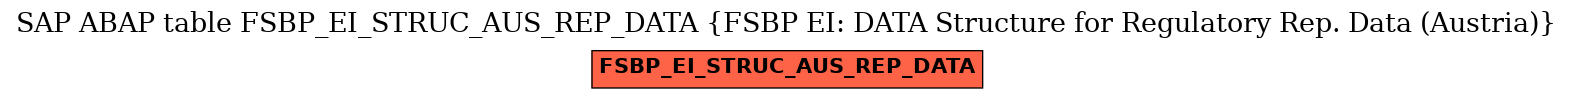 E-R Diagram for table FSBP_EI_STRUC_AUS_REP_DATA (FSBP EI: DATA Structure for Regulatory Rep. Data (Austria))